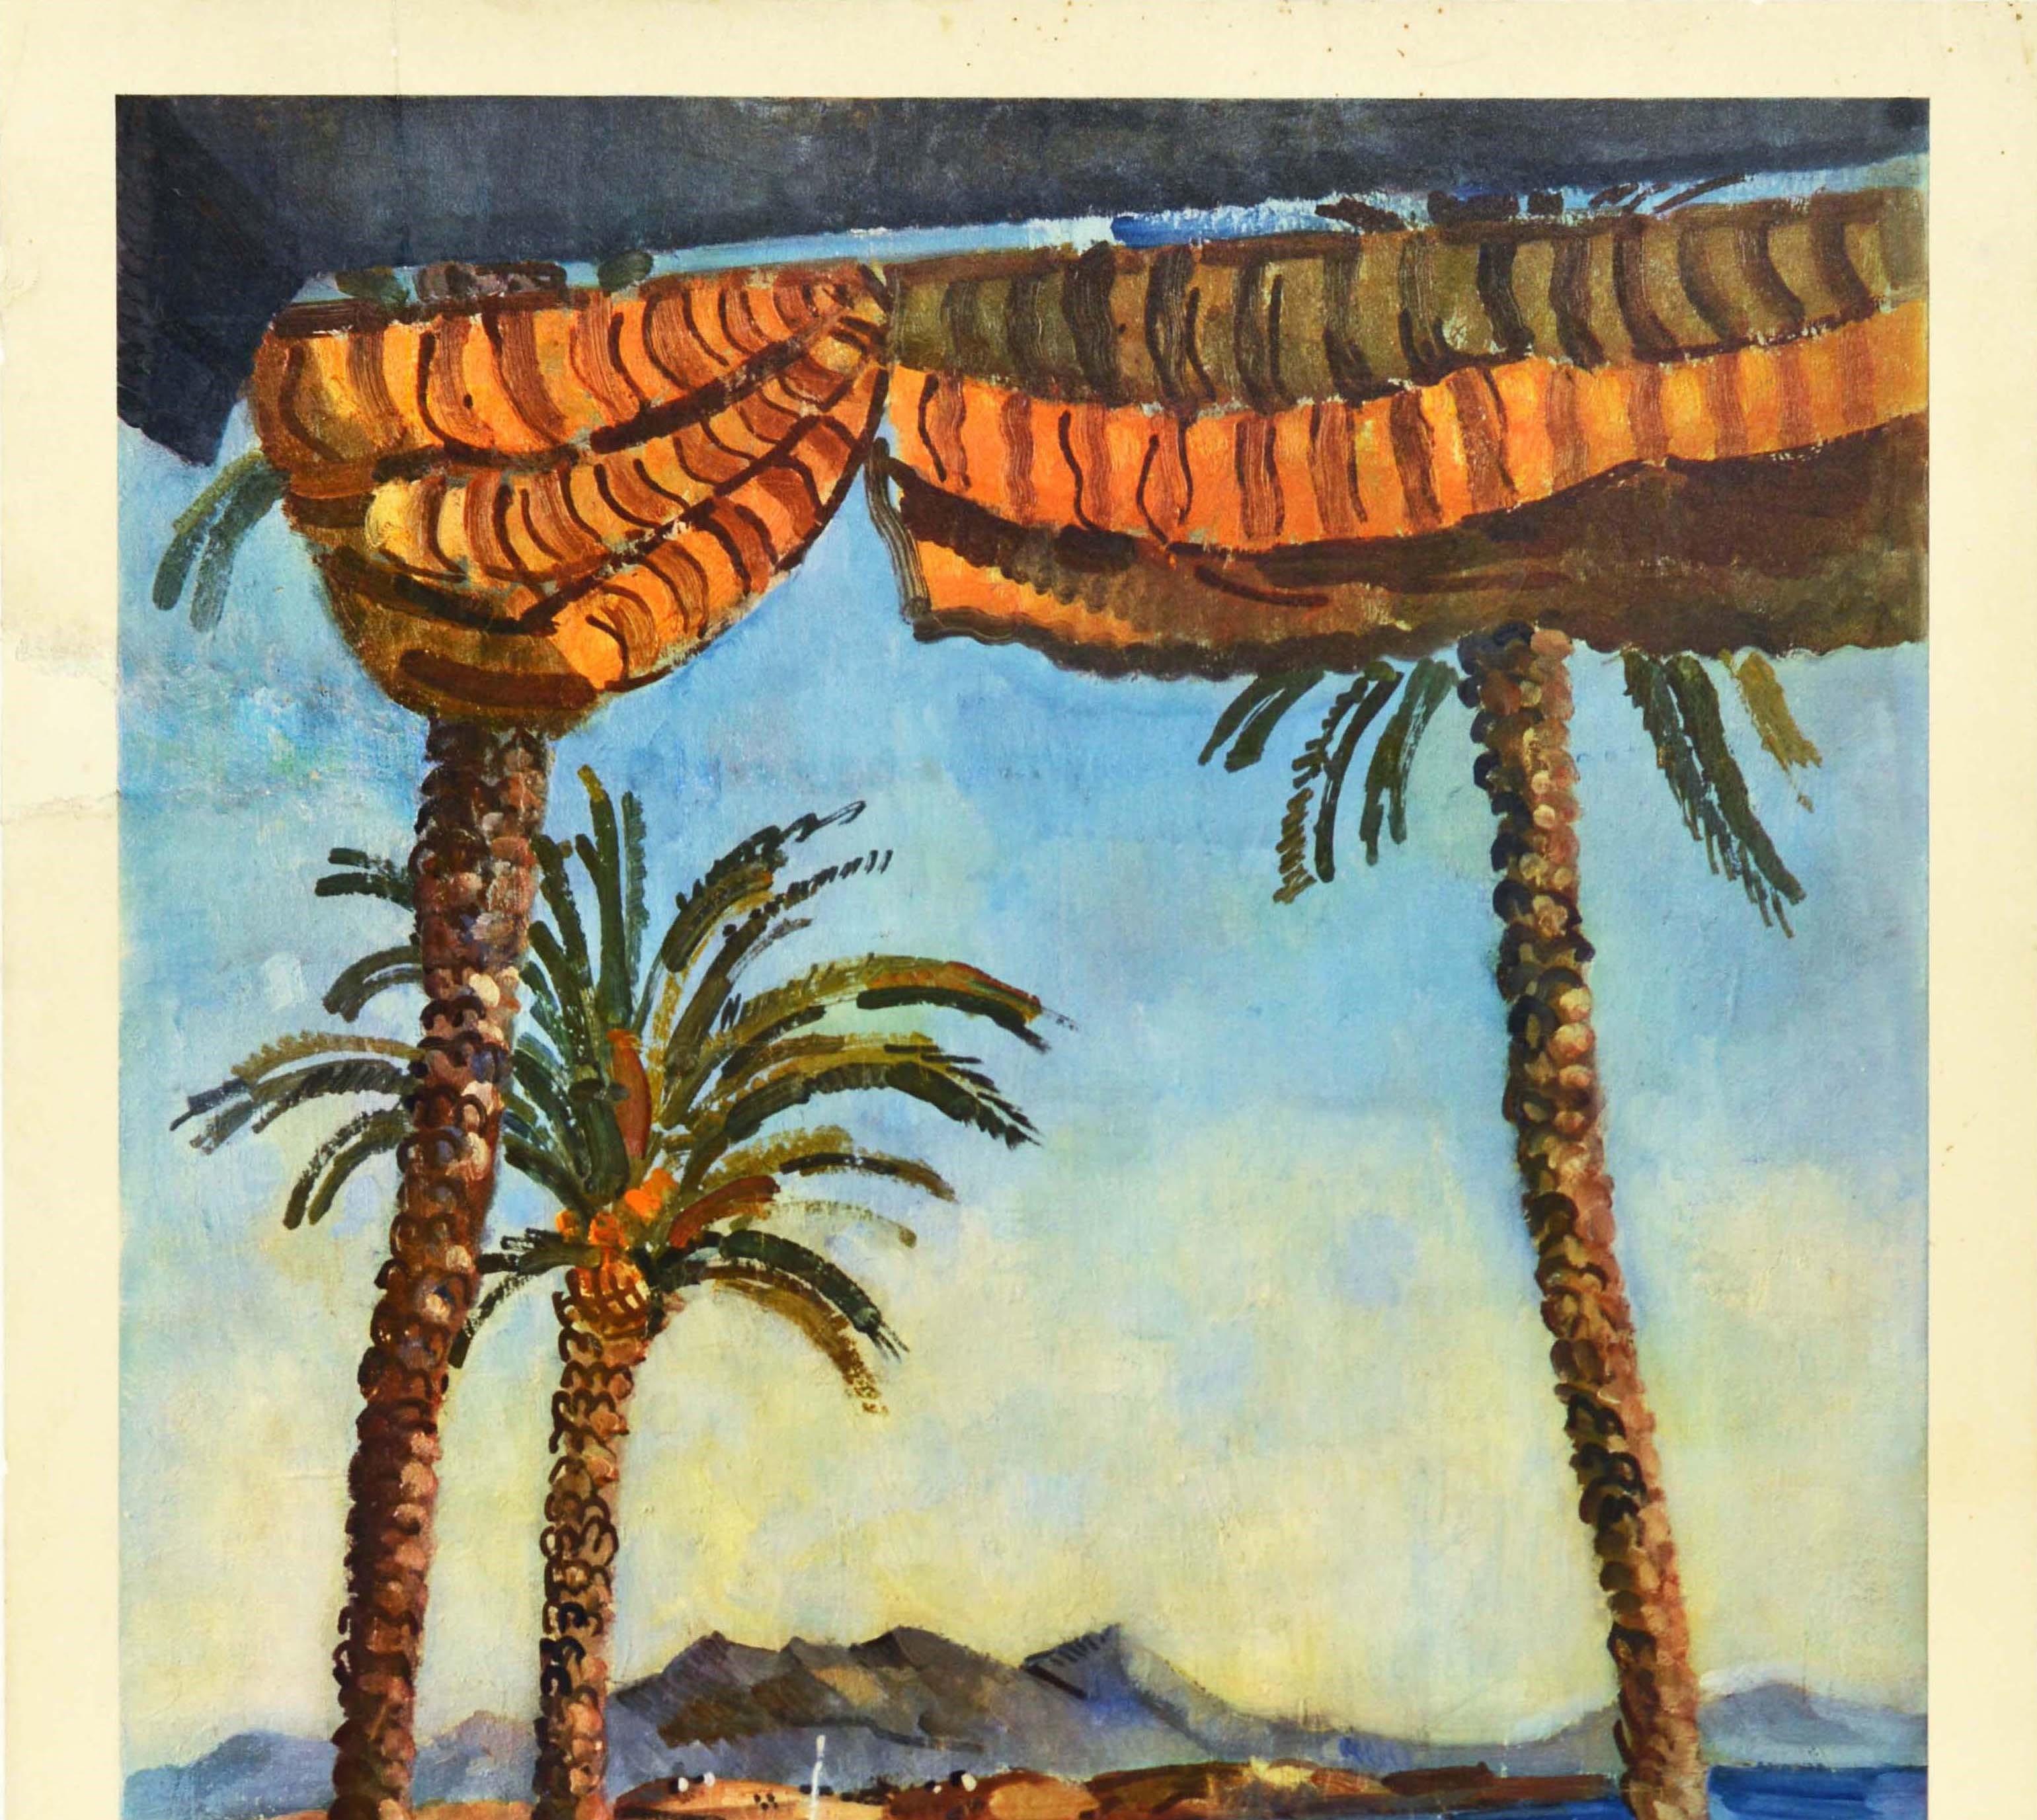 Original Vintage Rail Travel Poster Cote d'Azur French Riviera Mediterranean Sea - Print by Edmond Céria